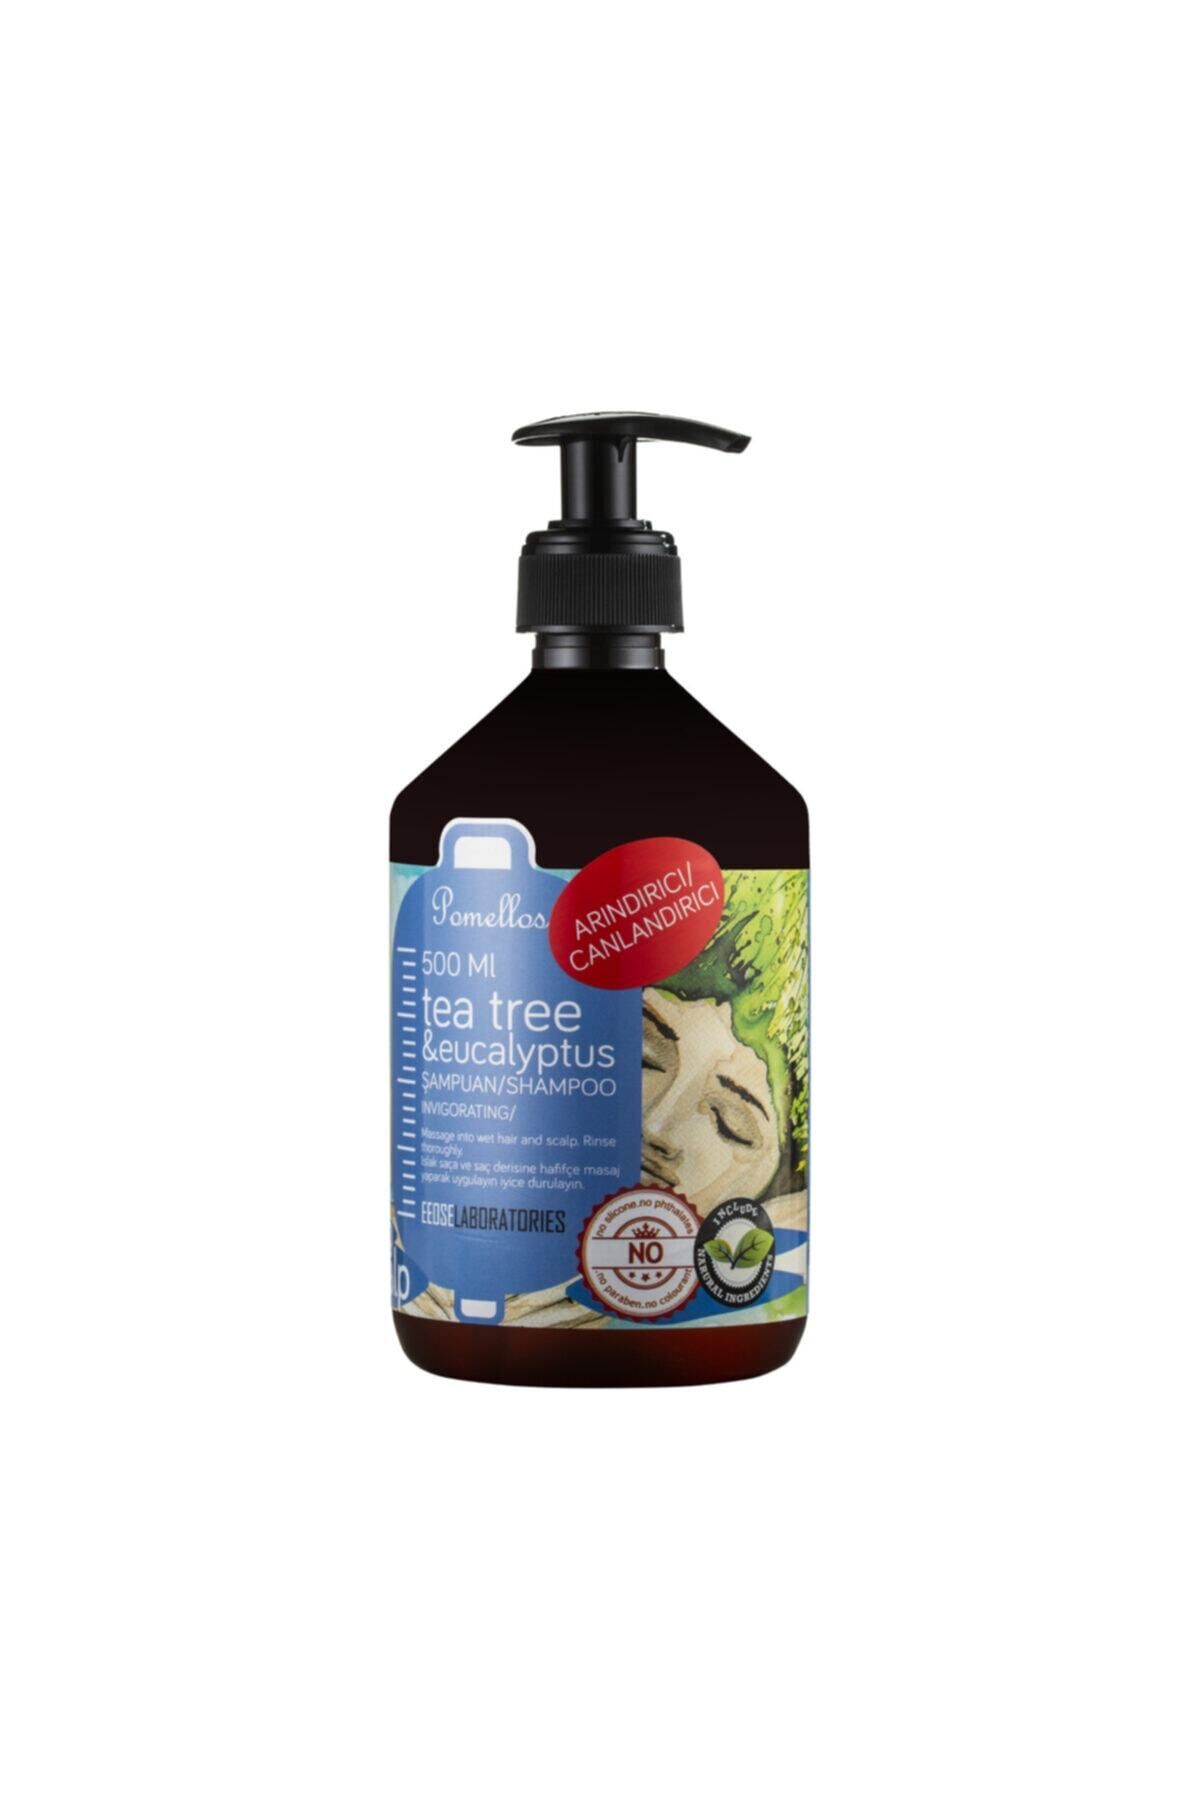 Pomellos Tea Tree Oil & Eaucalyptus Şampuan 500 ml